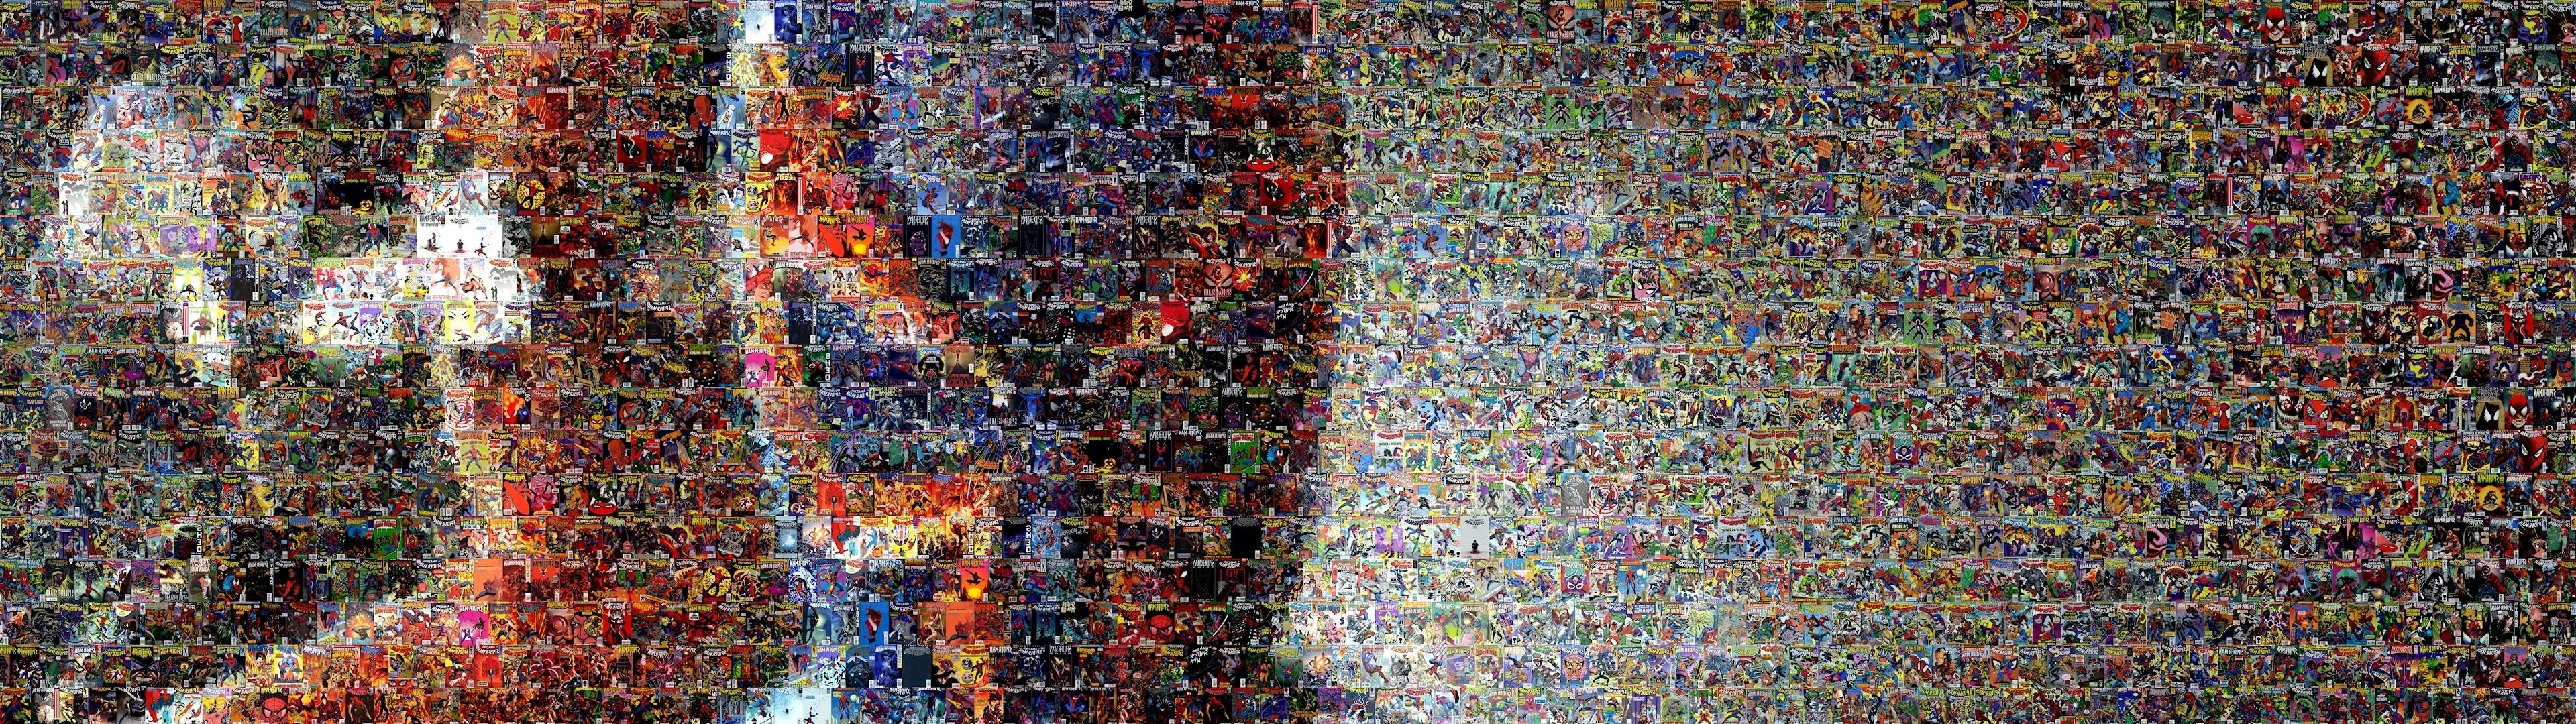 Wallpaper, 3840x1080 px, collage, comics, dual, marvel, mosaic